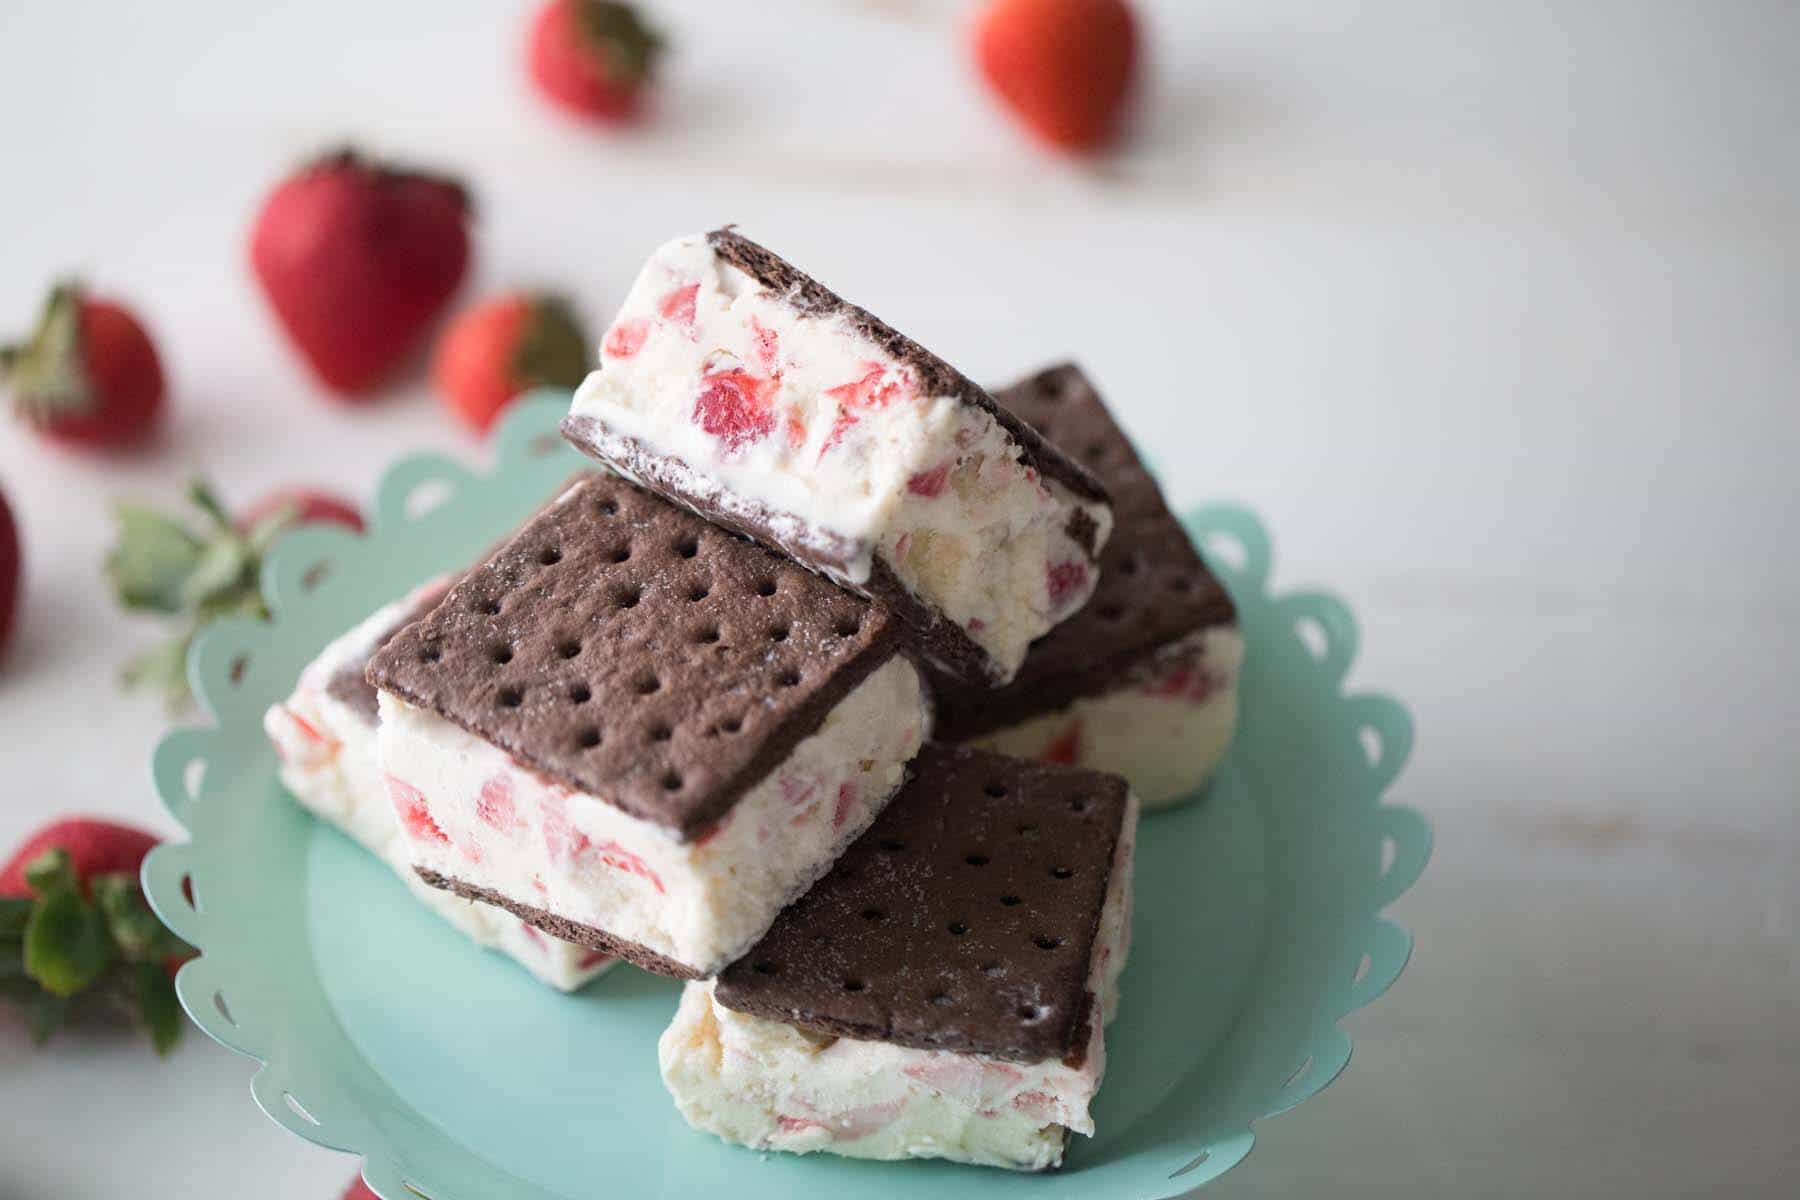 Strawberries and cream come together in this fun dessert recipe! These fun strawberry ice cream sanwiches will please everyone! lemonsforlulu.com